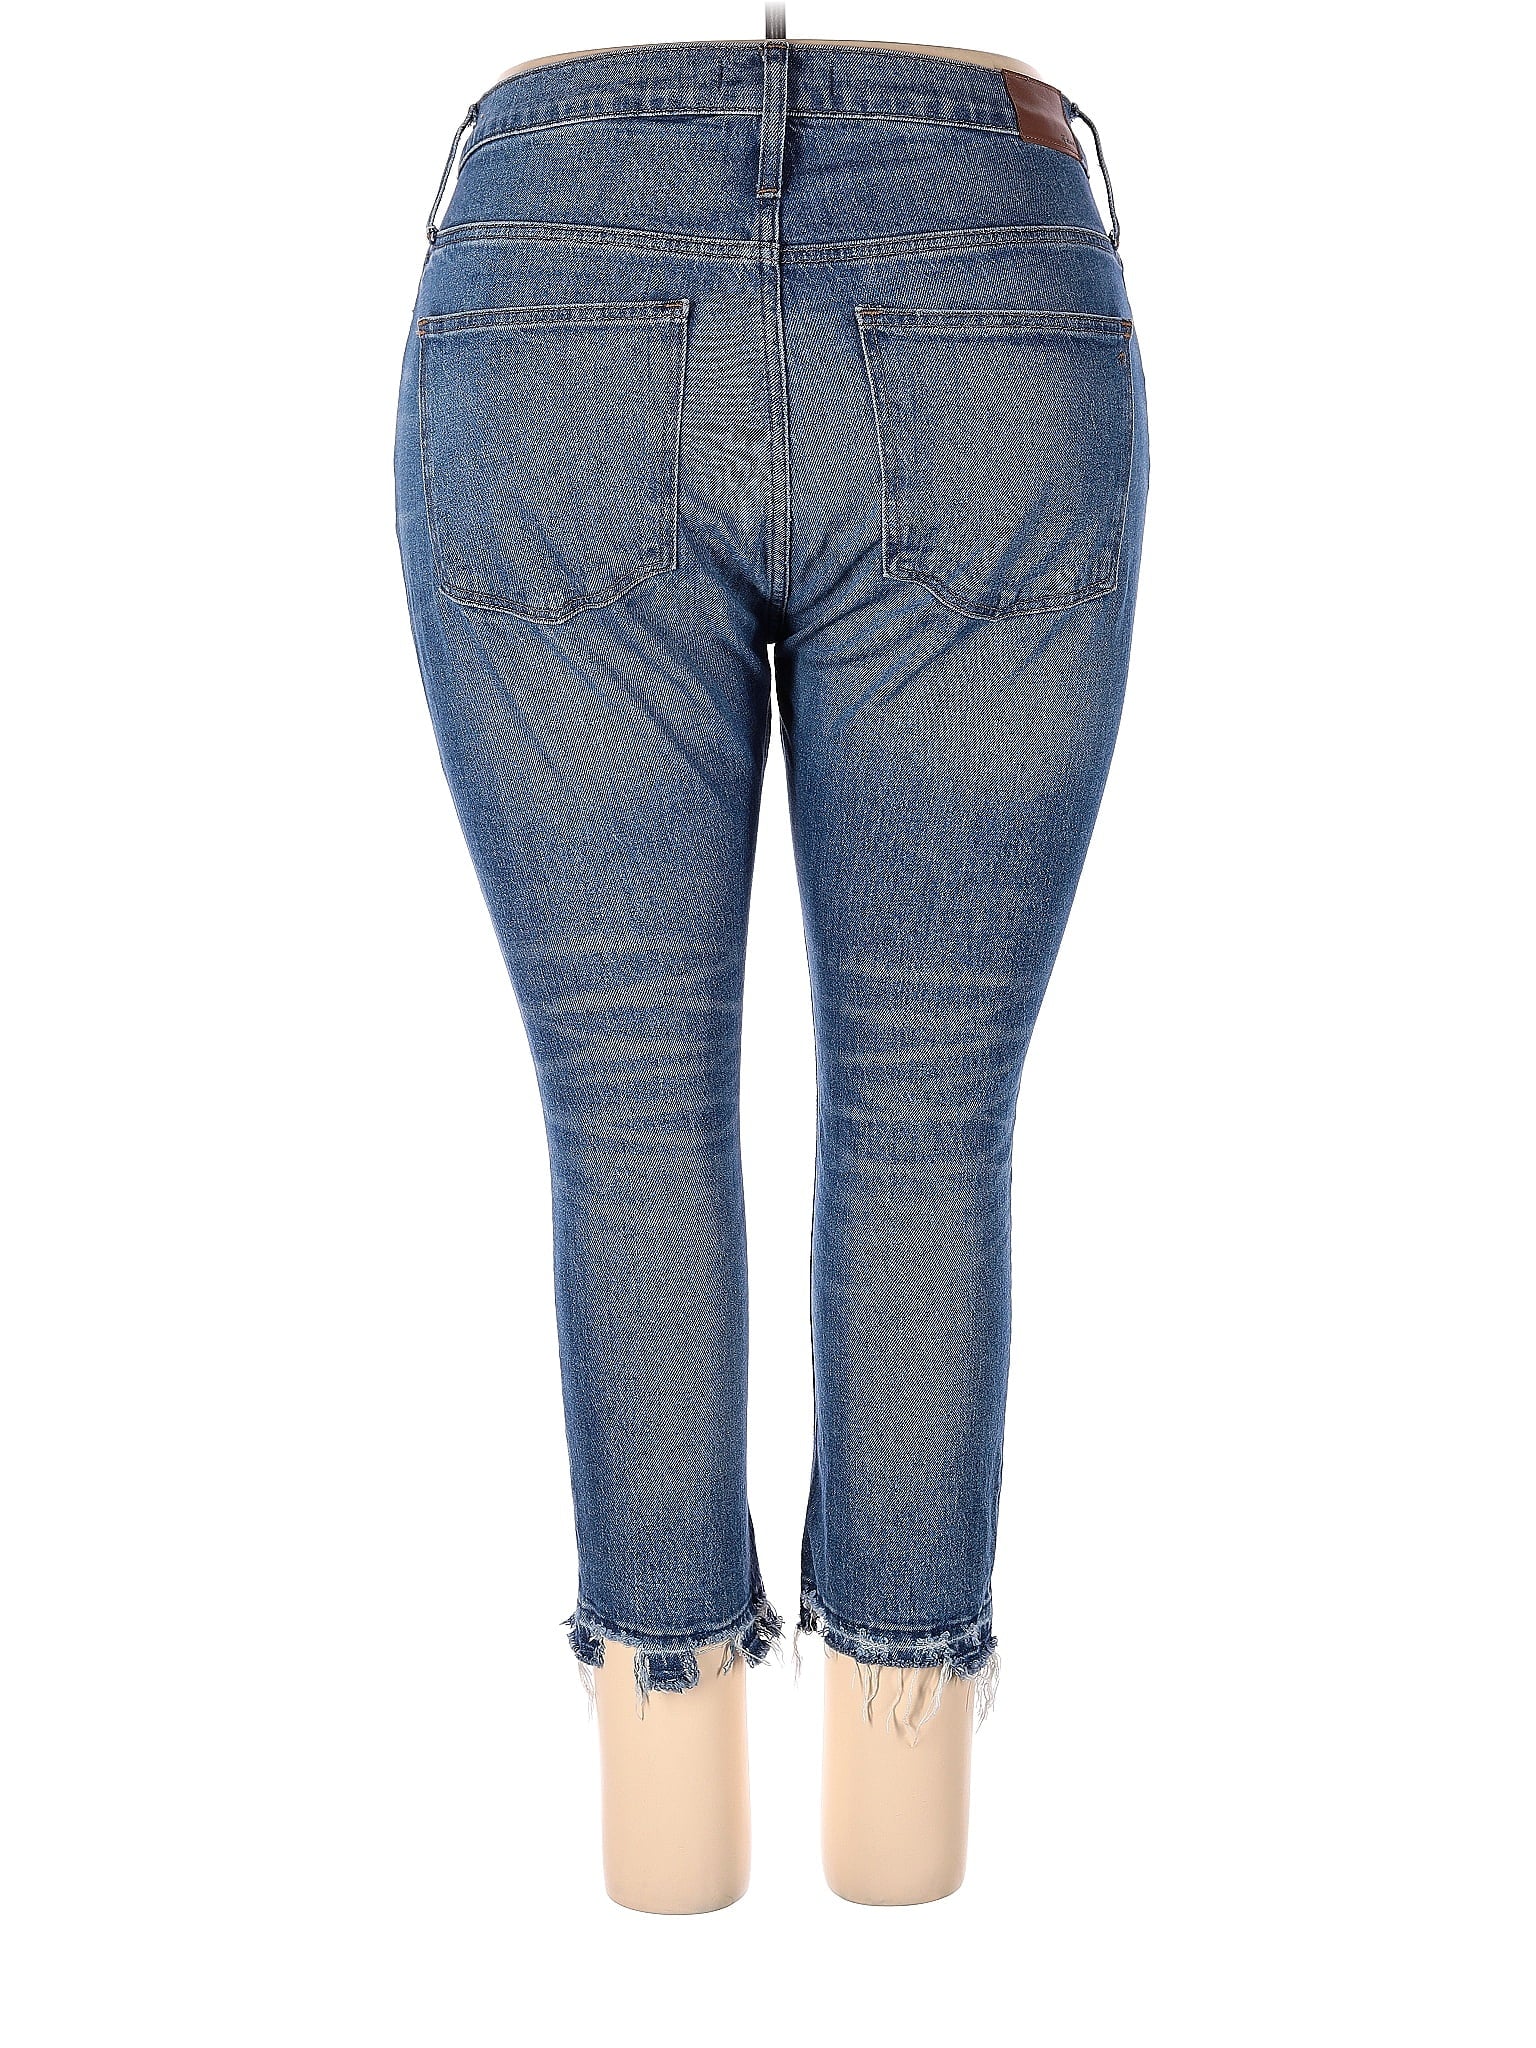 High-Rise Boyjeans Jeans in Medium Wash waist size - 33 P